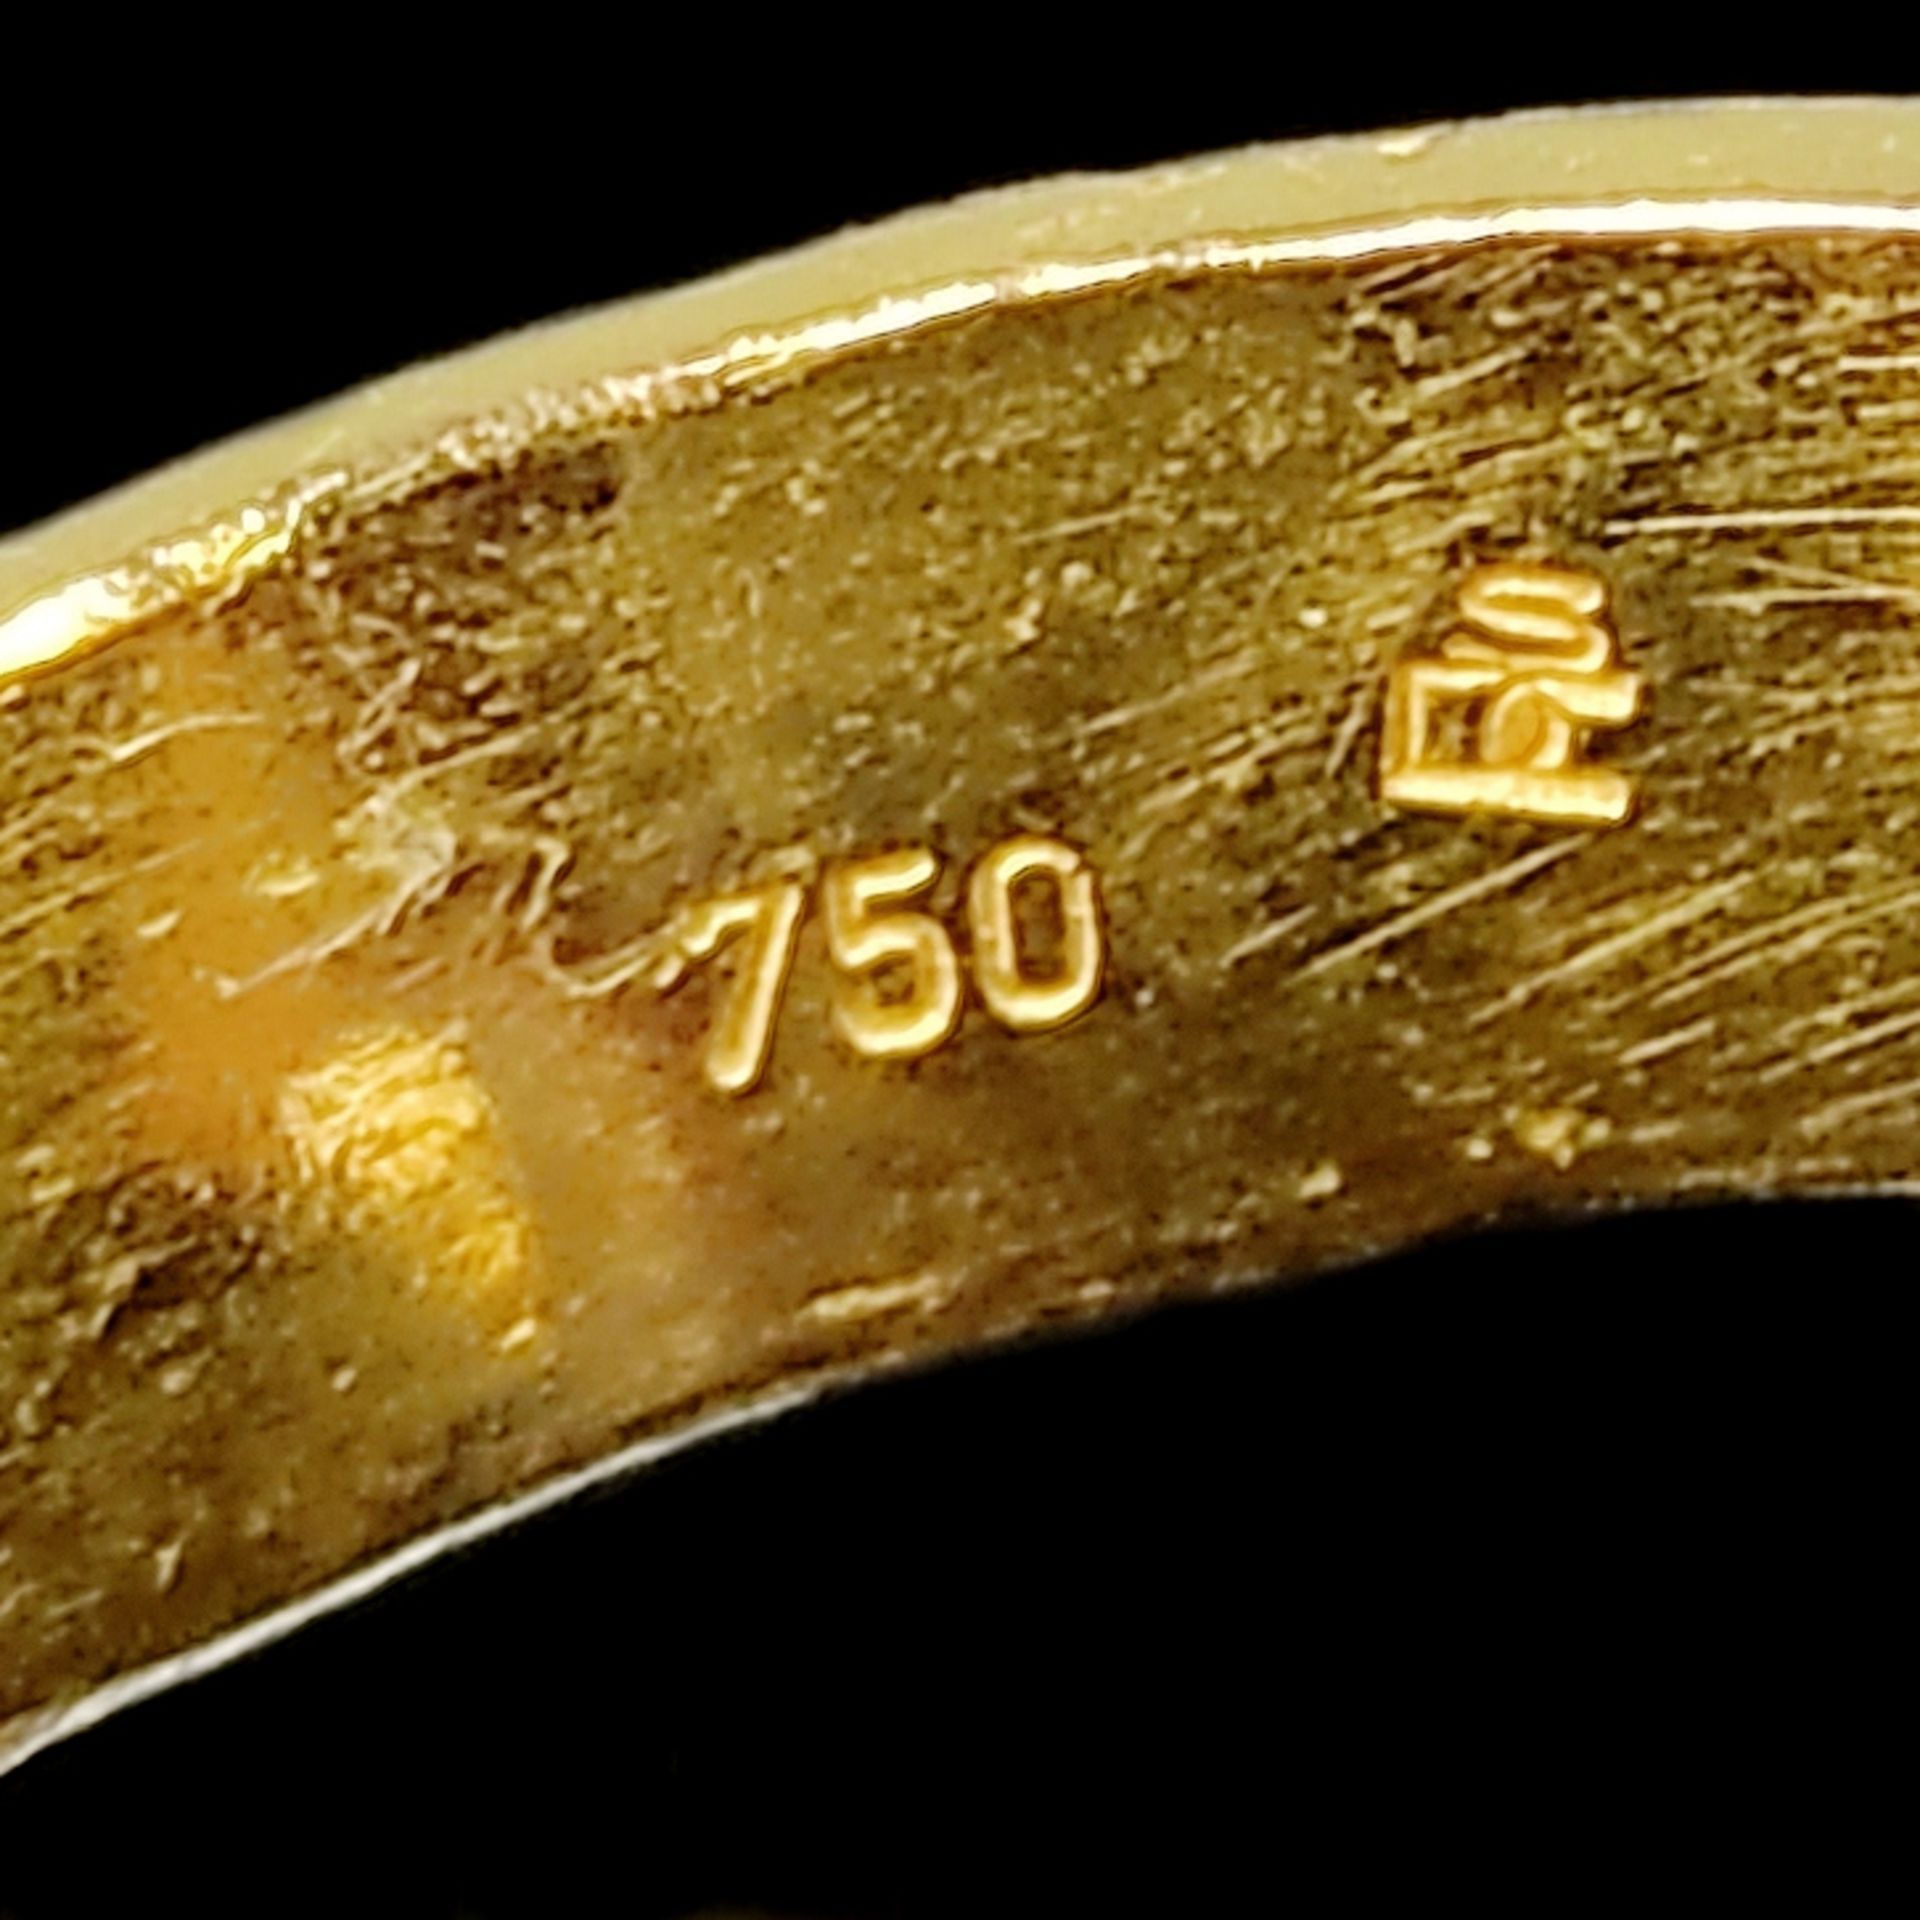 Smaragd-Ring, 750/18K Gelbgold (punziert), 12,45g, ovaler, angehobener Ringkopf mit mittigem Smarag - Bild 3 aus 3